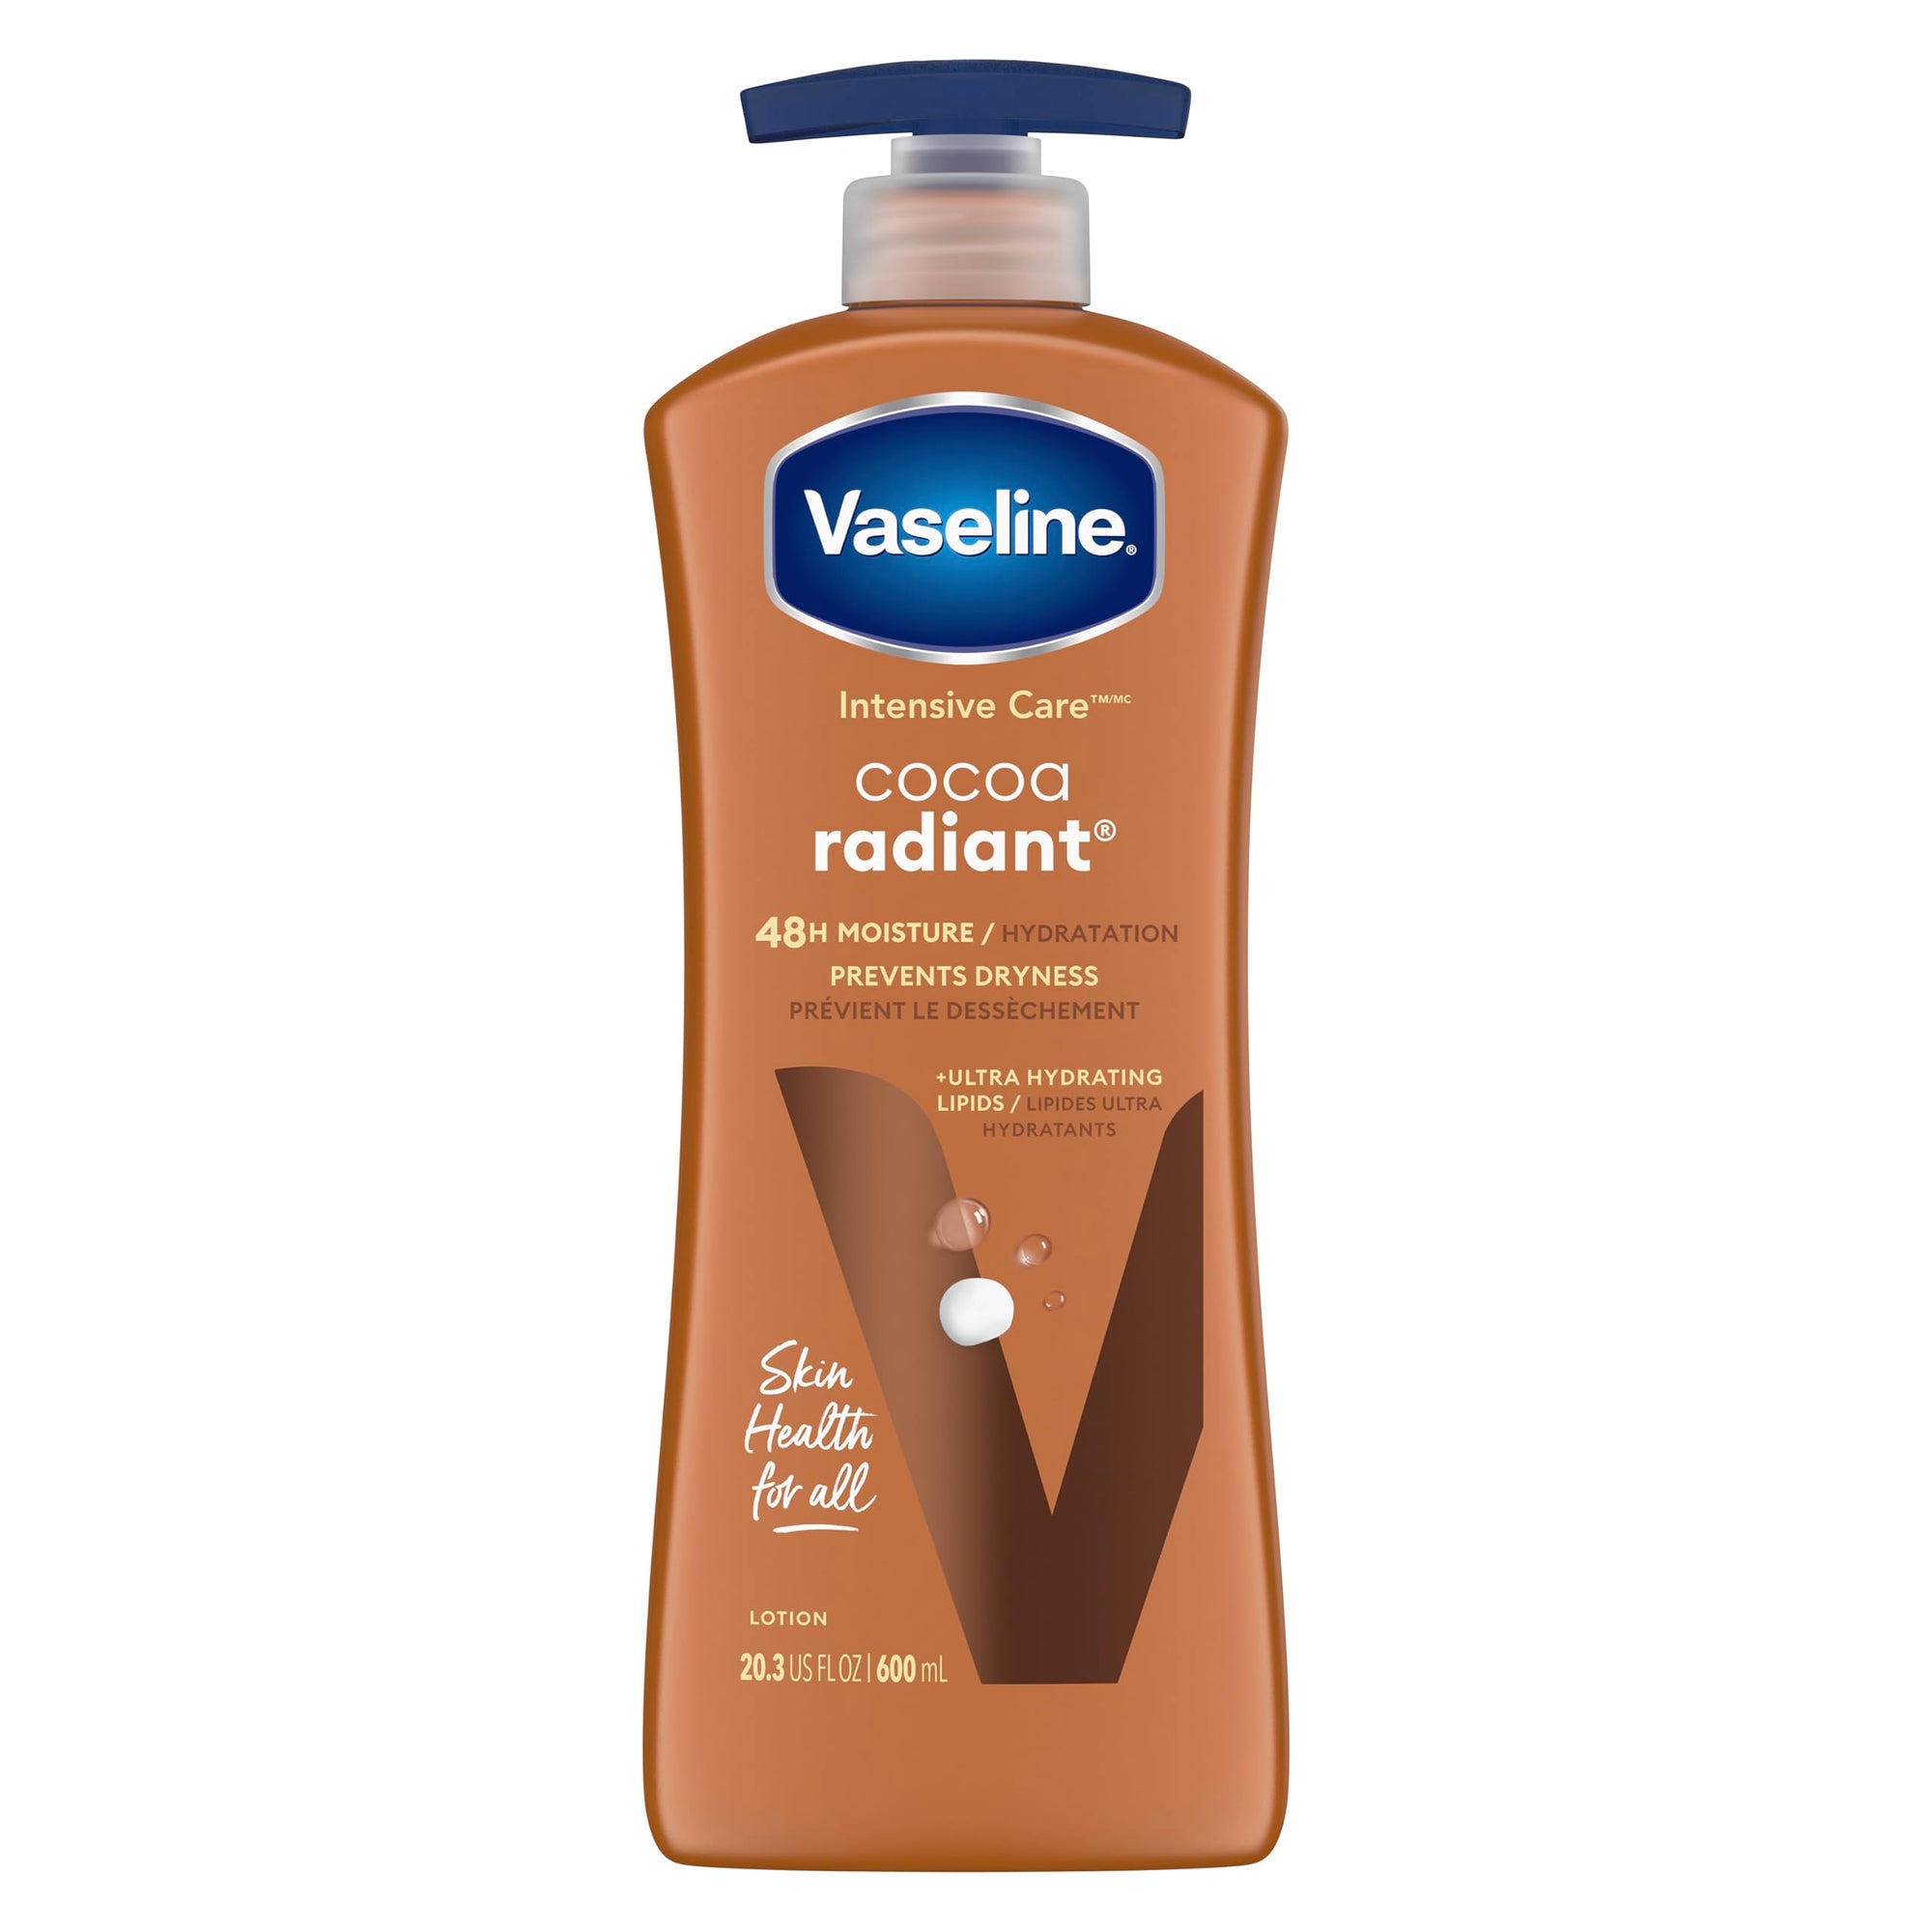 Vaseline Intensive Care™ Cocoa Radiant